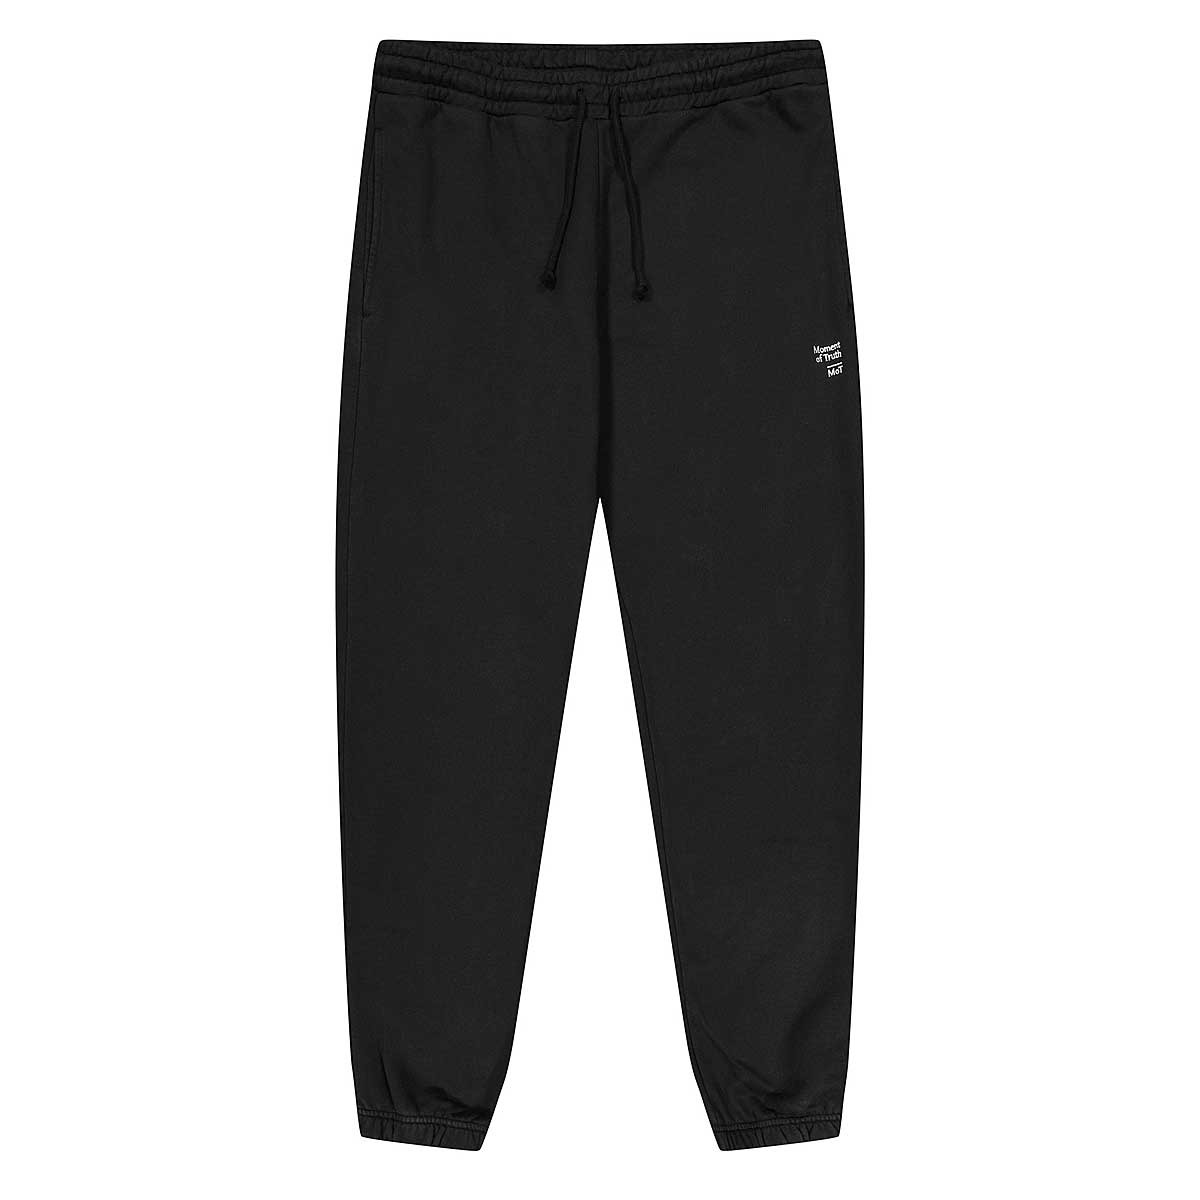 Buy Lux Sweatpants for EUR 59.95 on KICKZ.com!